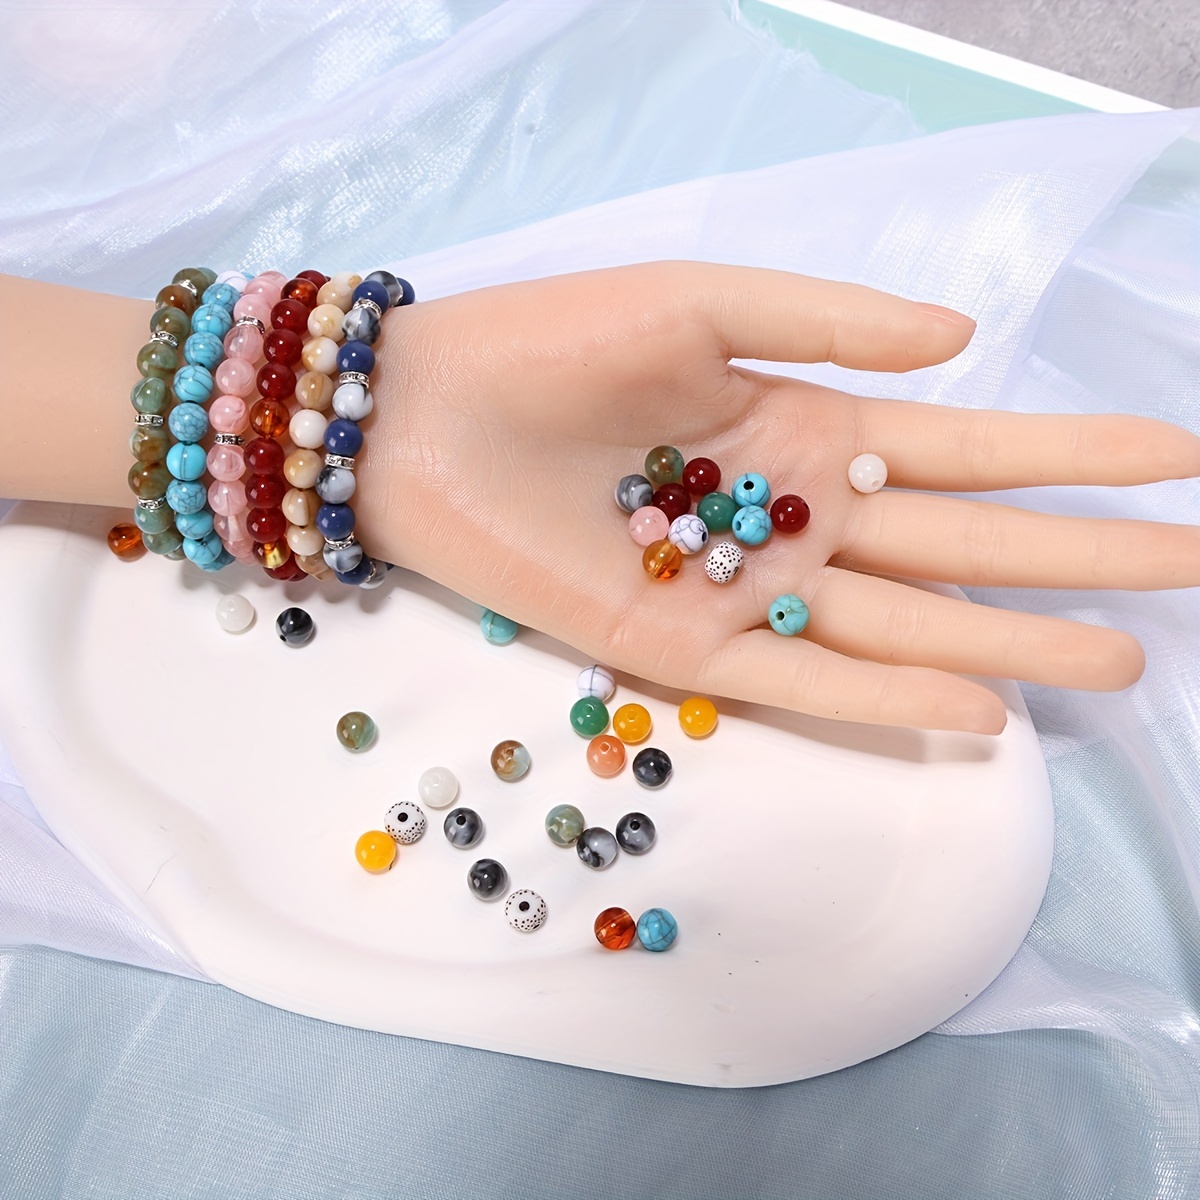 8mm Round Beads Bracelet Making Kit Beads, Bracelet Beads Marble